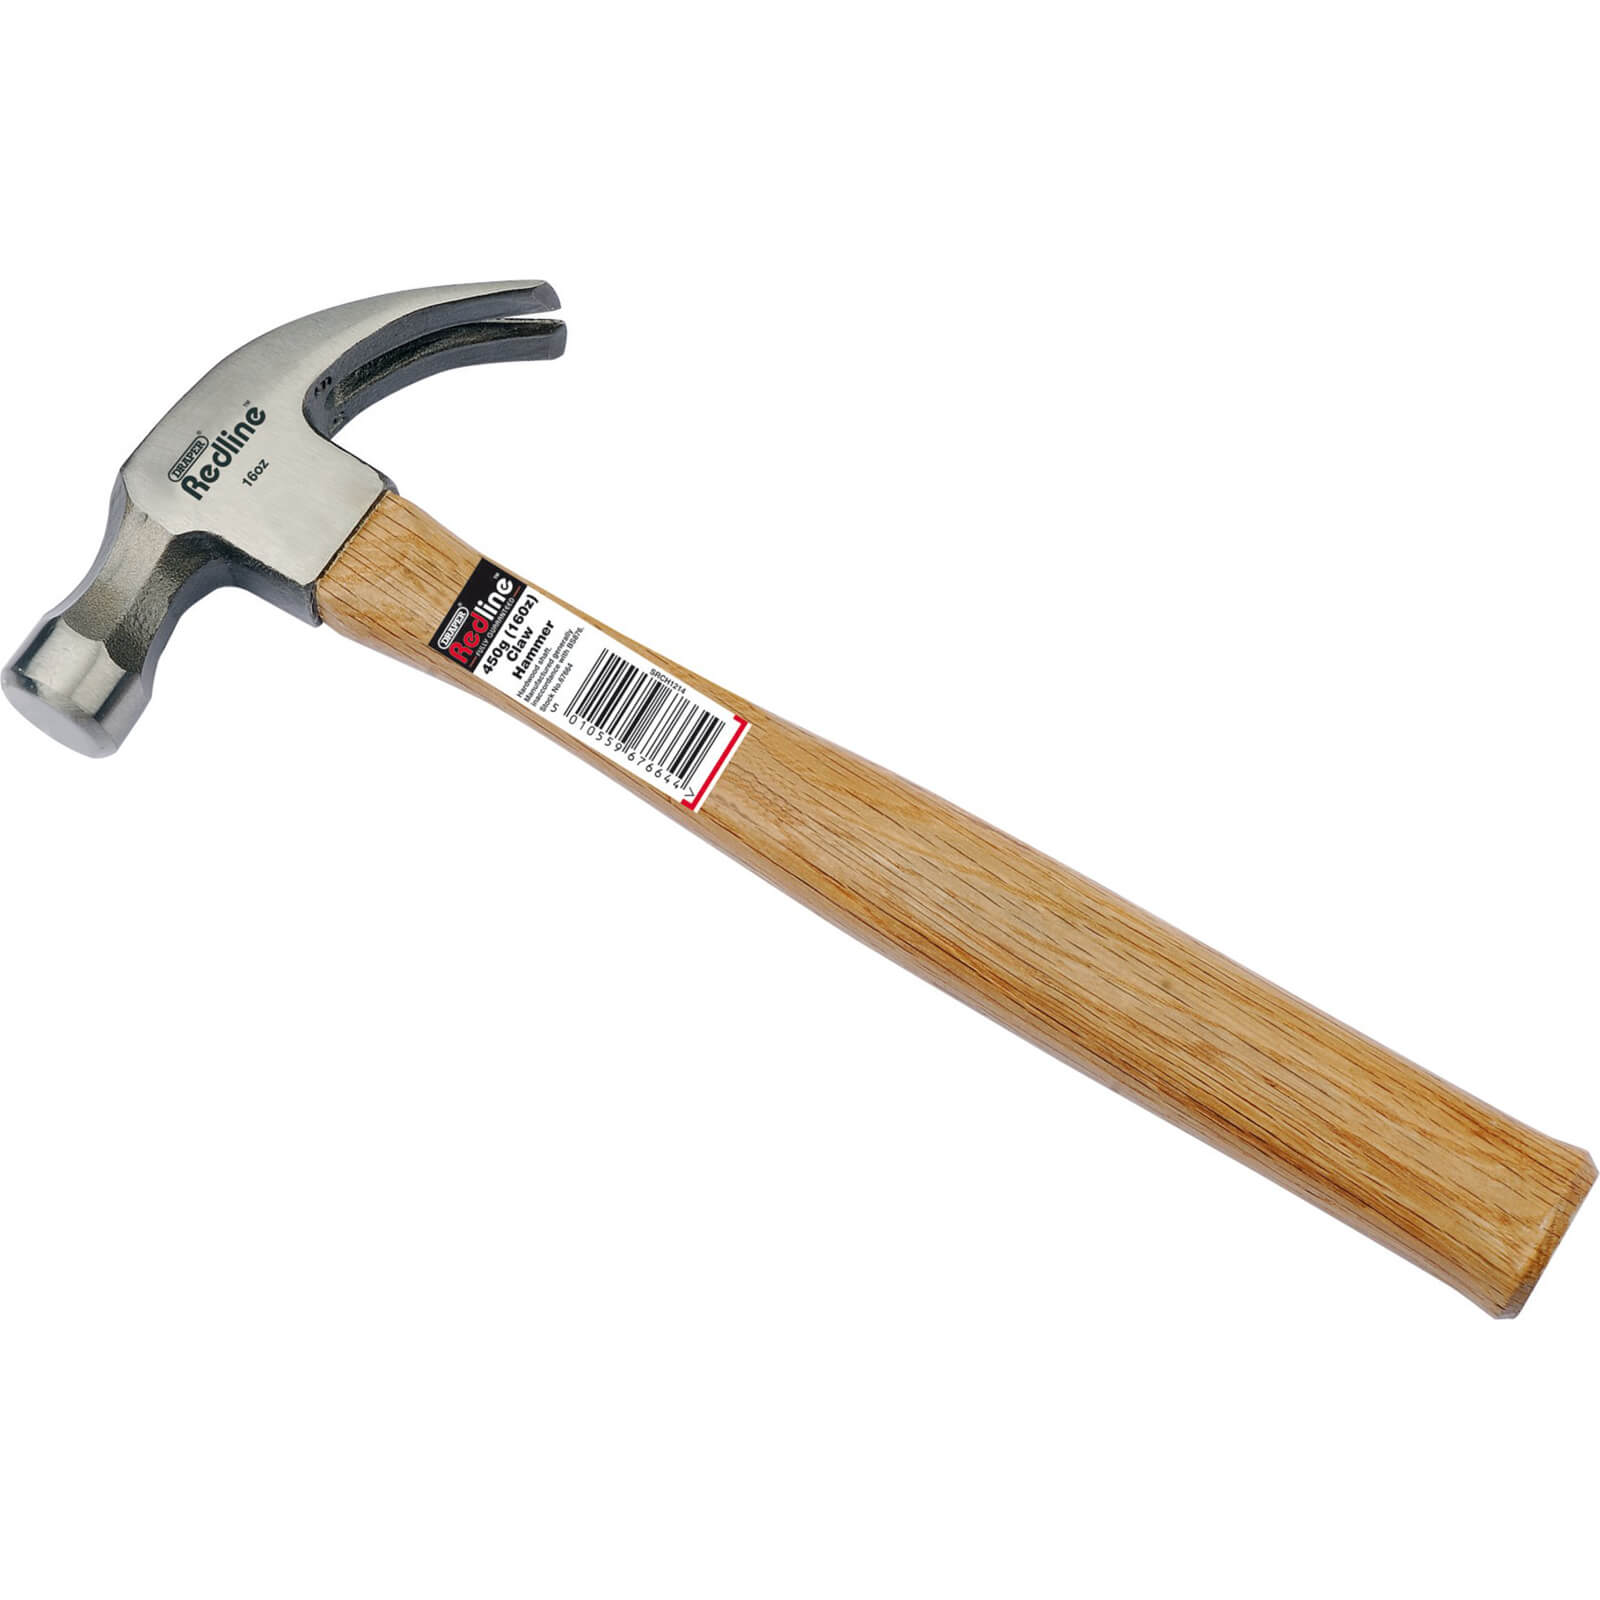 Image of Draper Hardwood Shaft Claw Hammer 450g